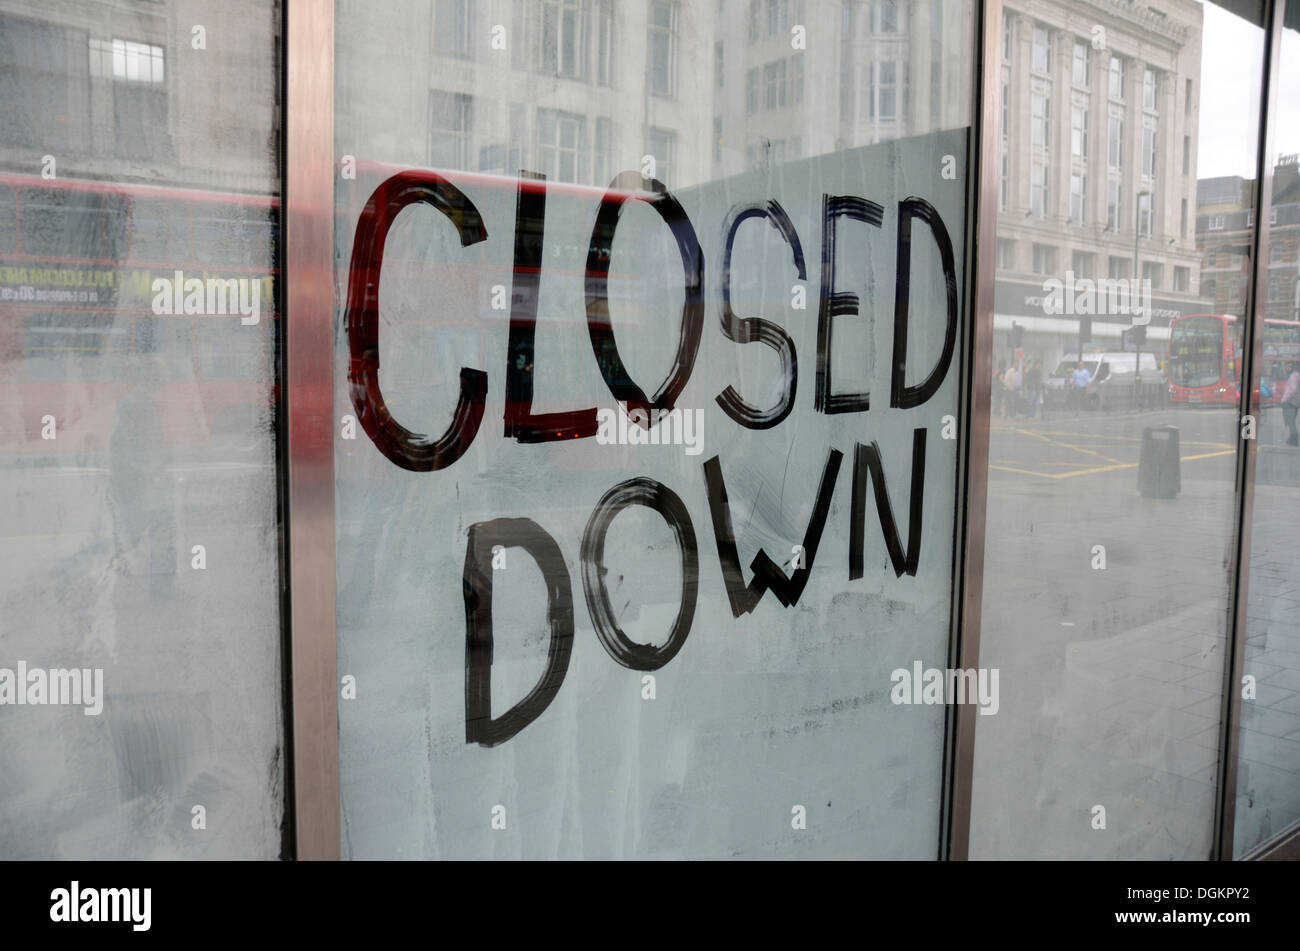 Closed Down written on a shop window. Stock Photo